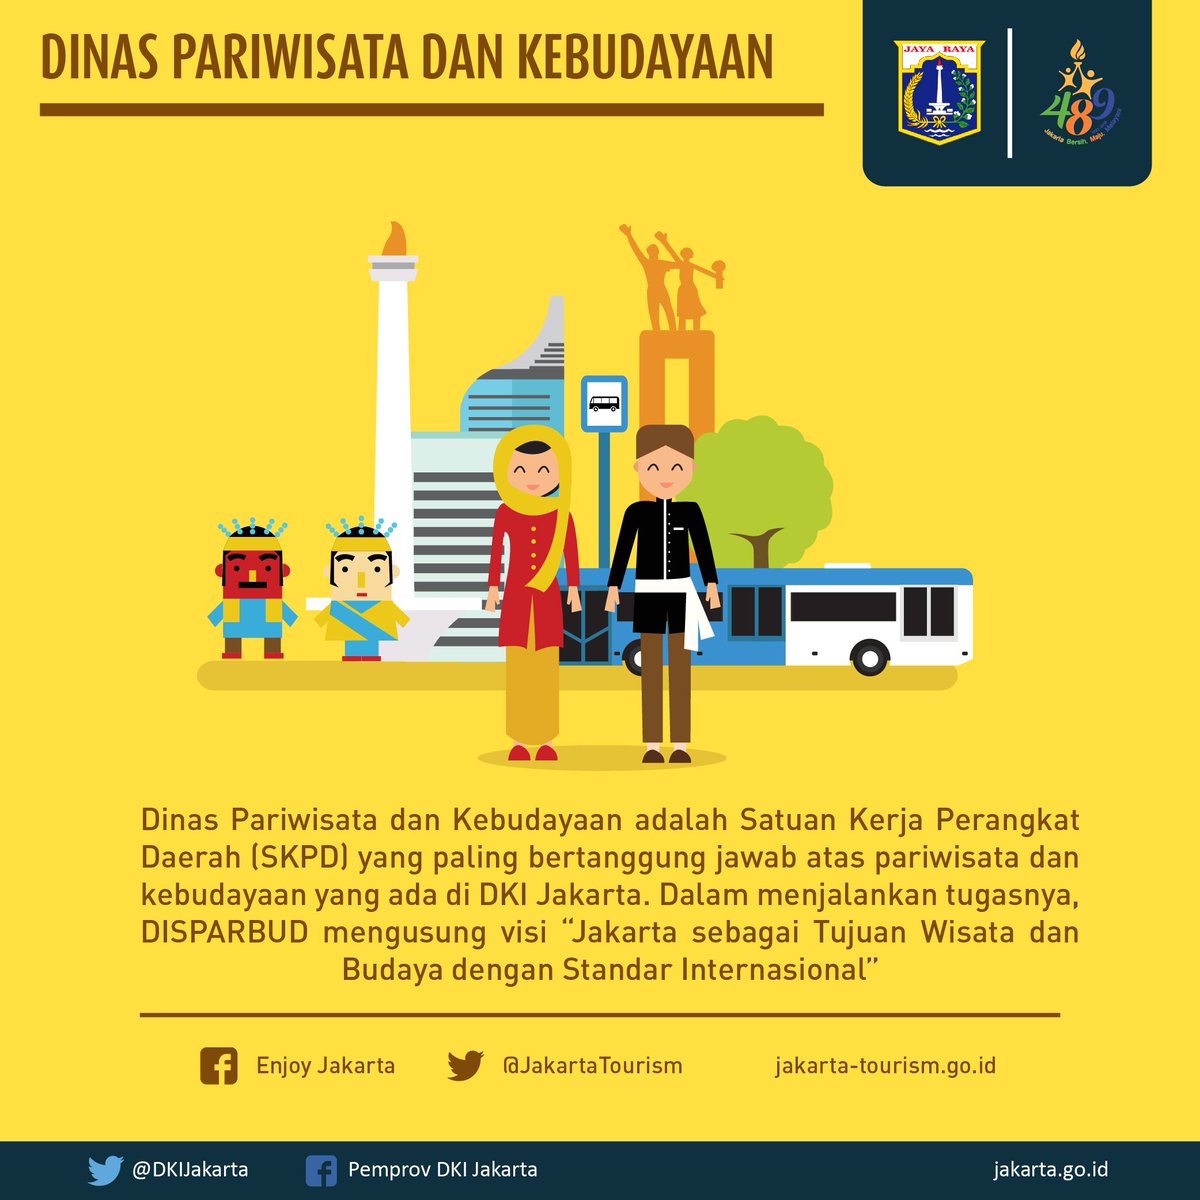 Pemprov DKI Jakarta בטוויטר: "Sekilas mengenai Dinas Pariwisata